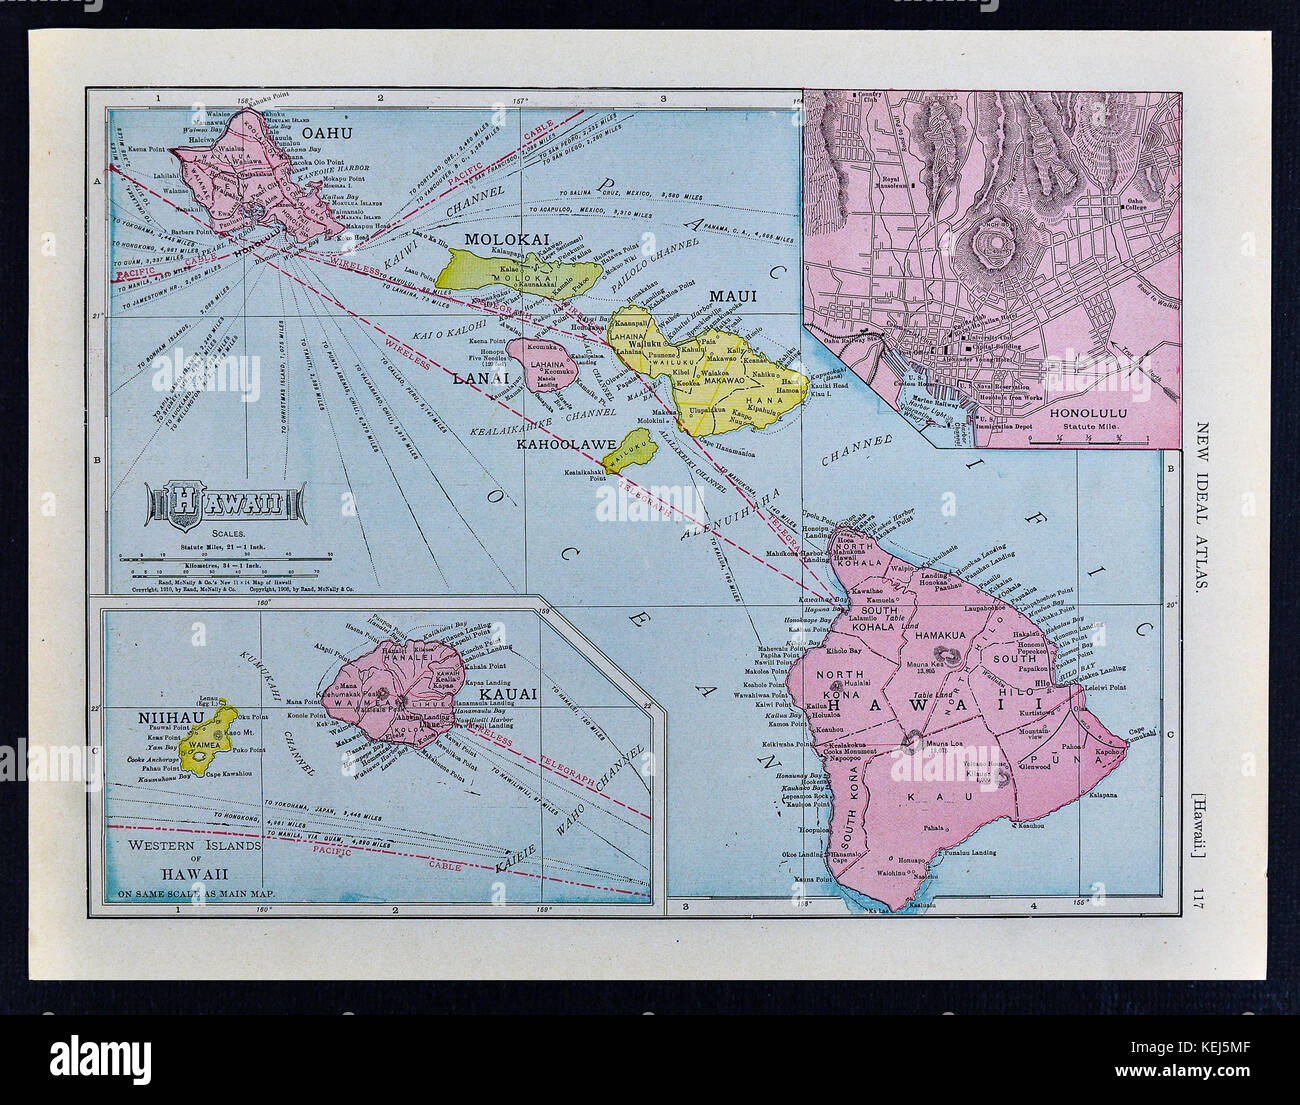 1911 mcnally Map - Hawaii Inseln - Oahu honolulu Maui Stockfoto